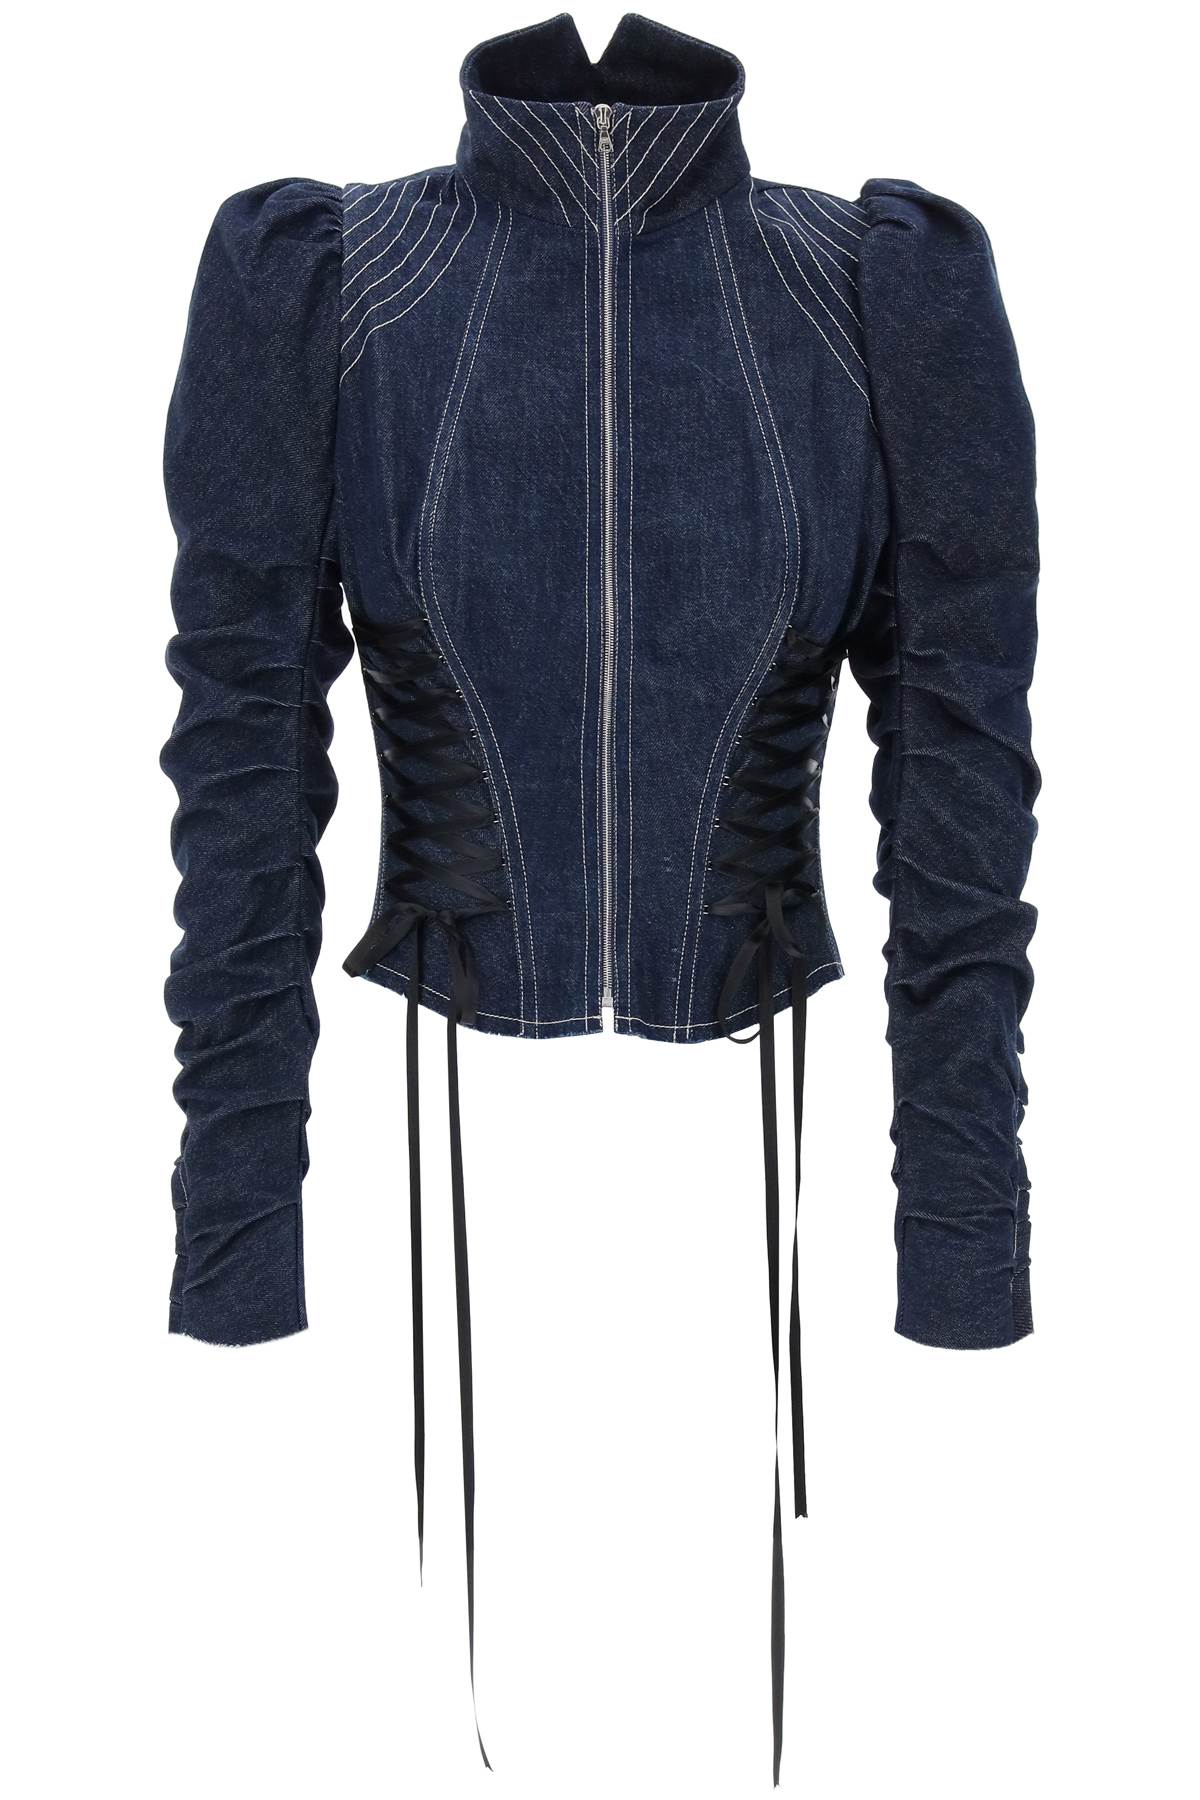 DILARA FINDIKOGLU Elegant Denim Jacket with Corset-Style Details for Women - SS24 Collection